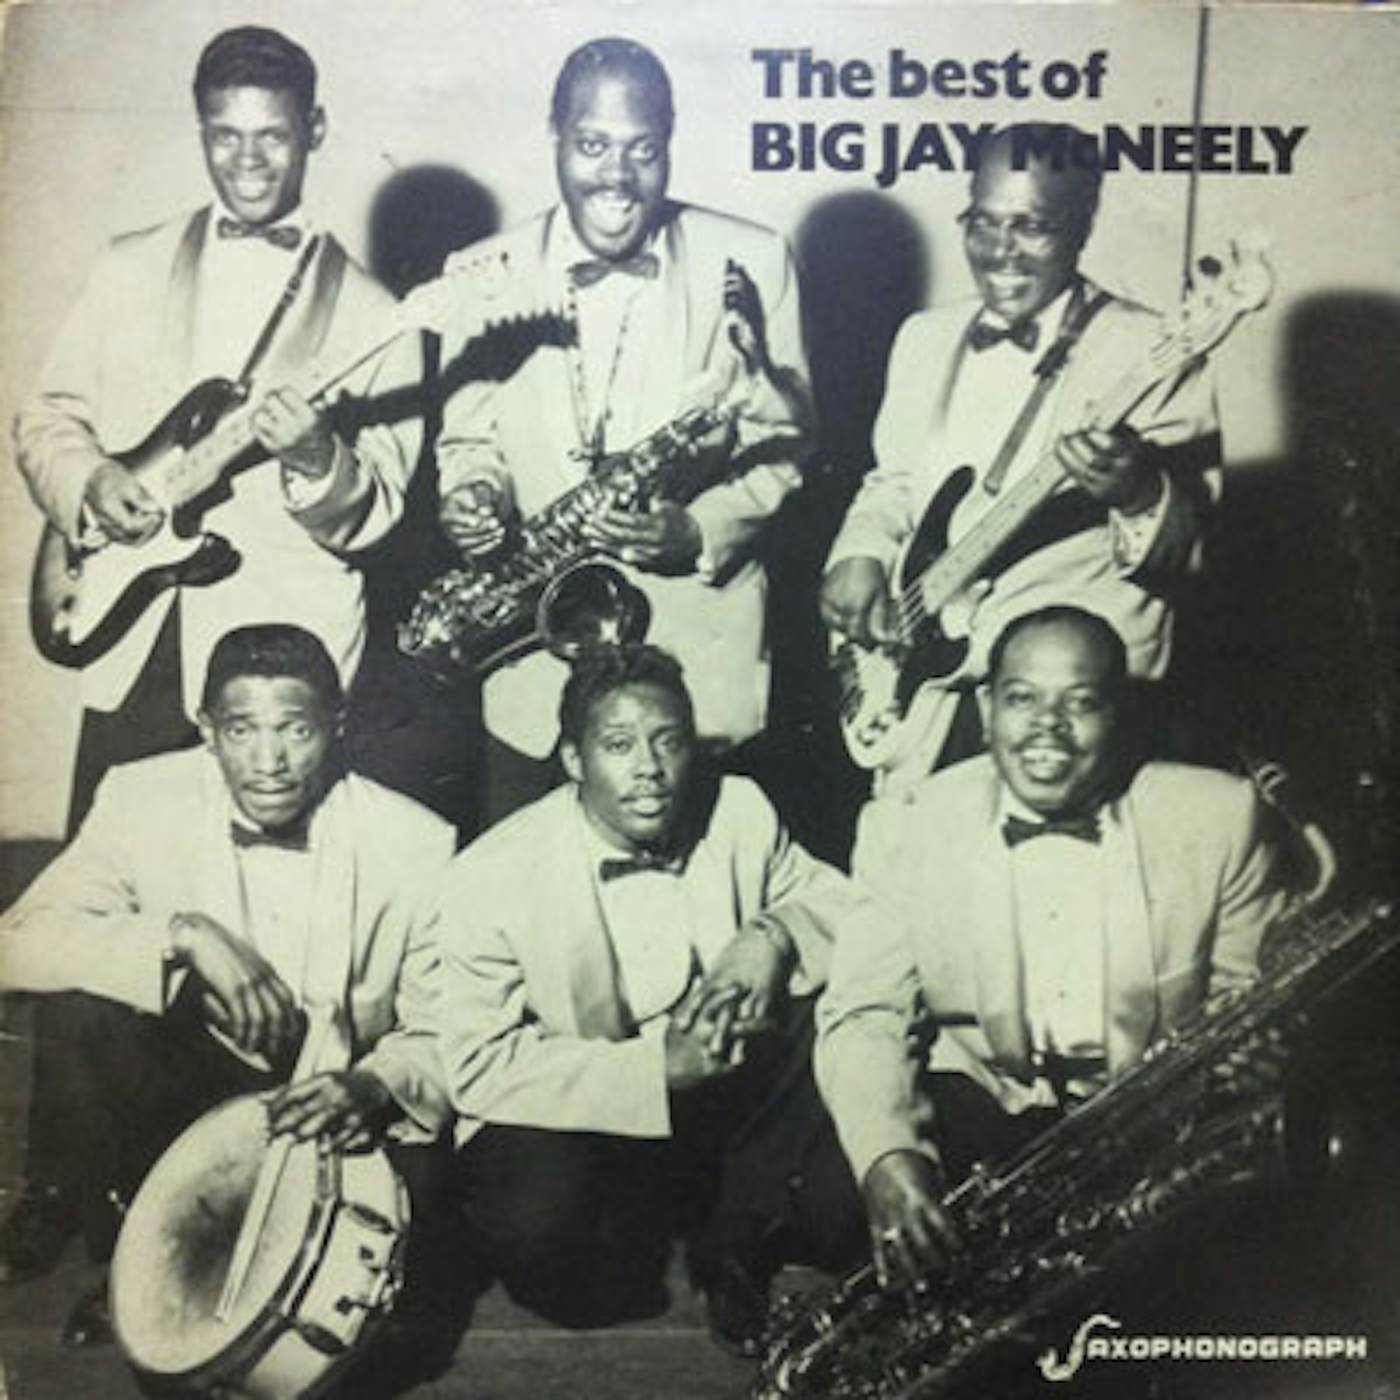 THE BEST OF BIG JAY MCNEELY Vinyl Record